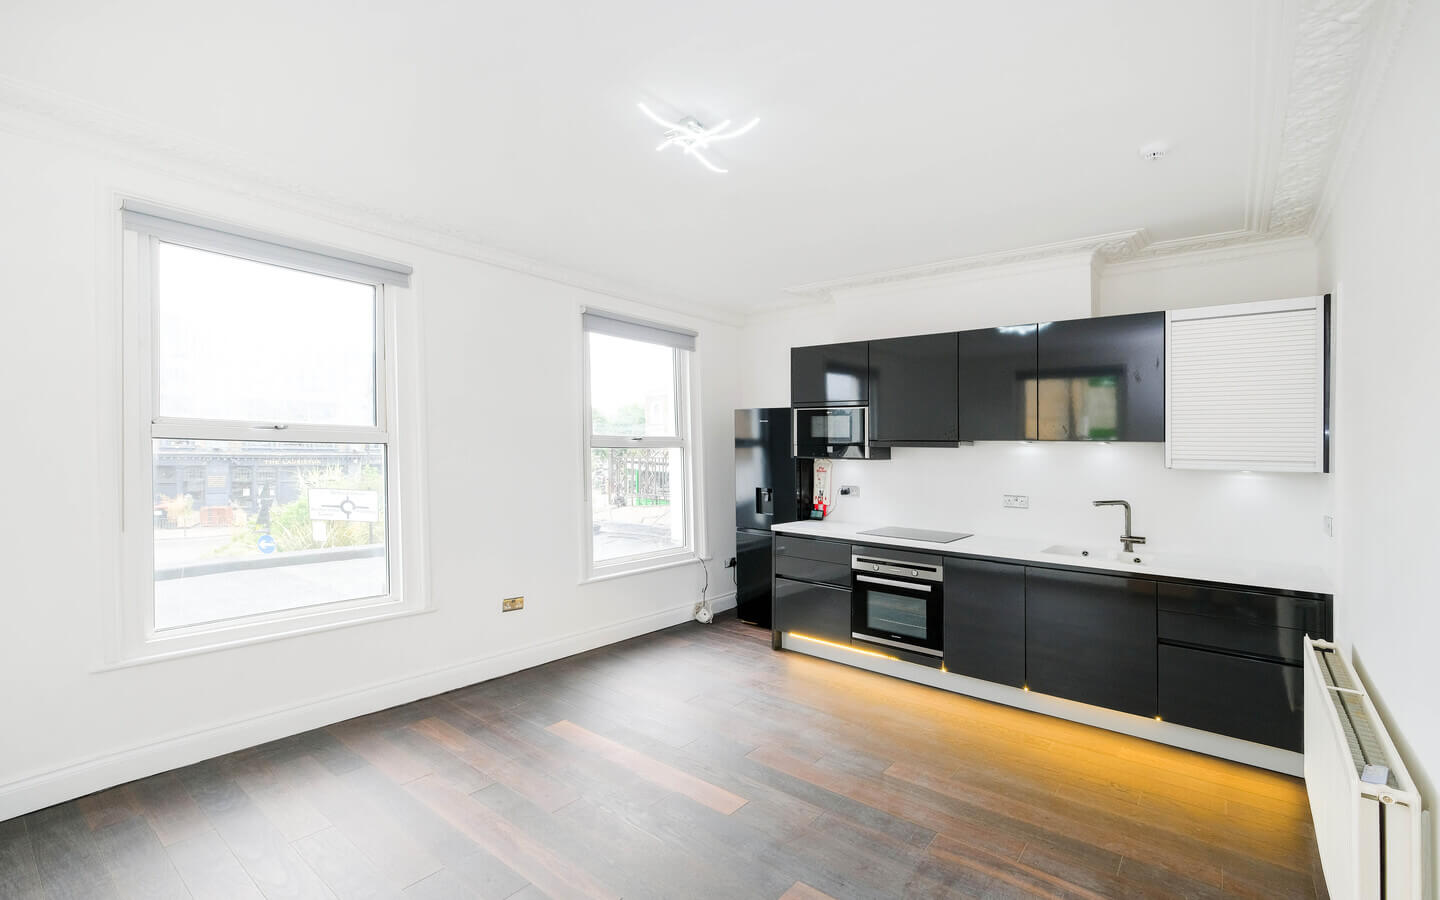 3 Bedroom Flat For Rent in Hackney London E9 7HD